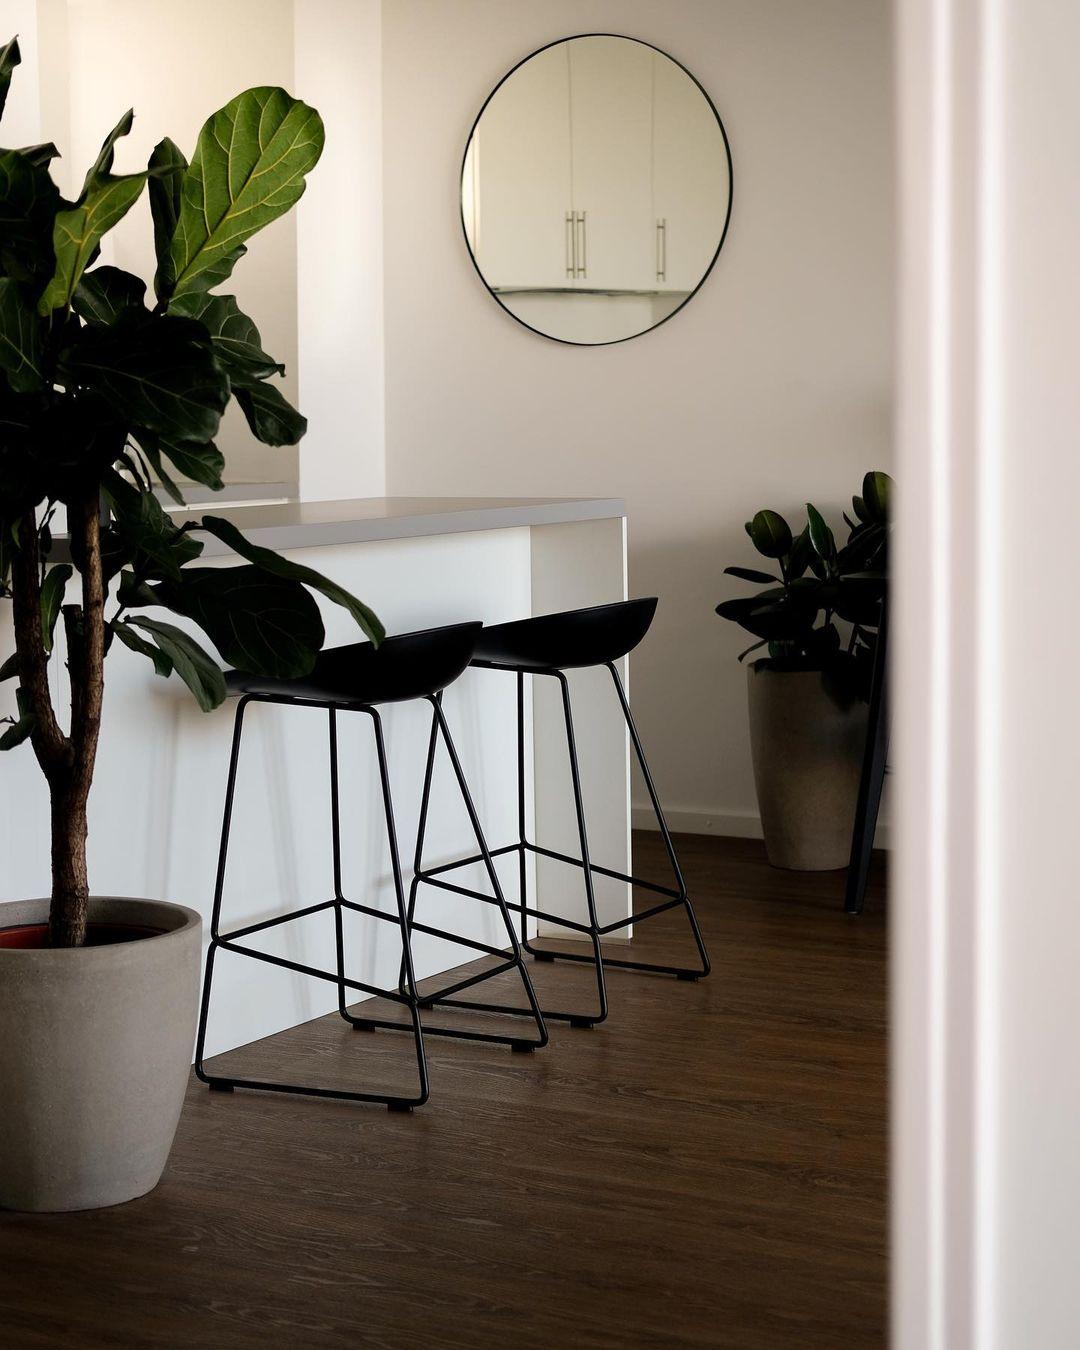 Inside a Munich-based designer’s 590 sq. ft. sleek, warm minimalist apartment